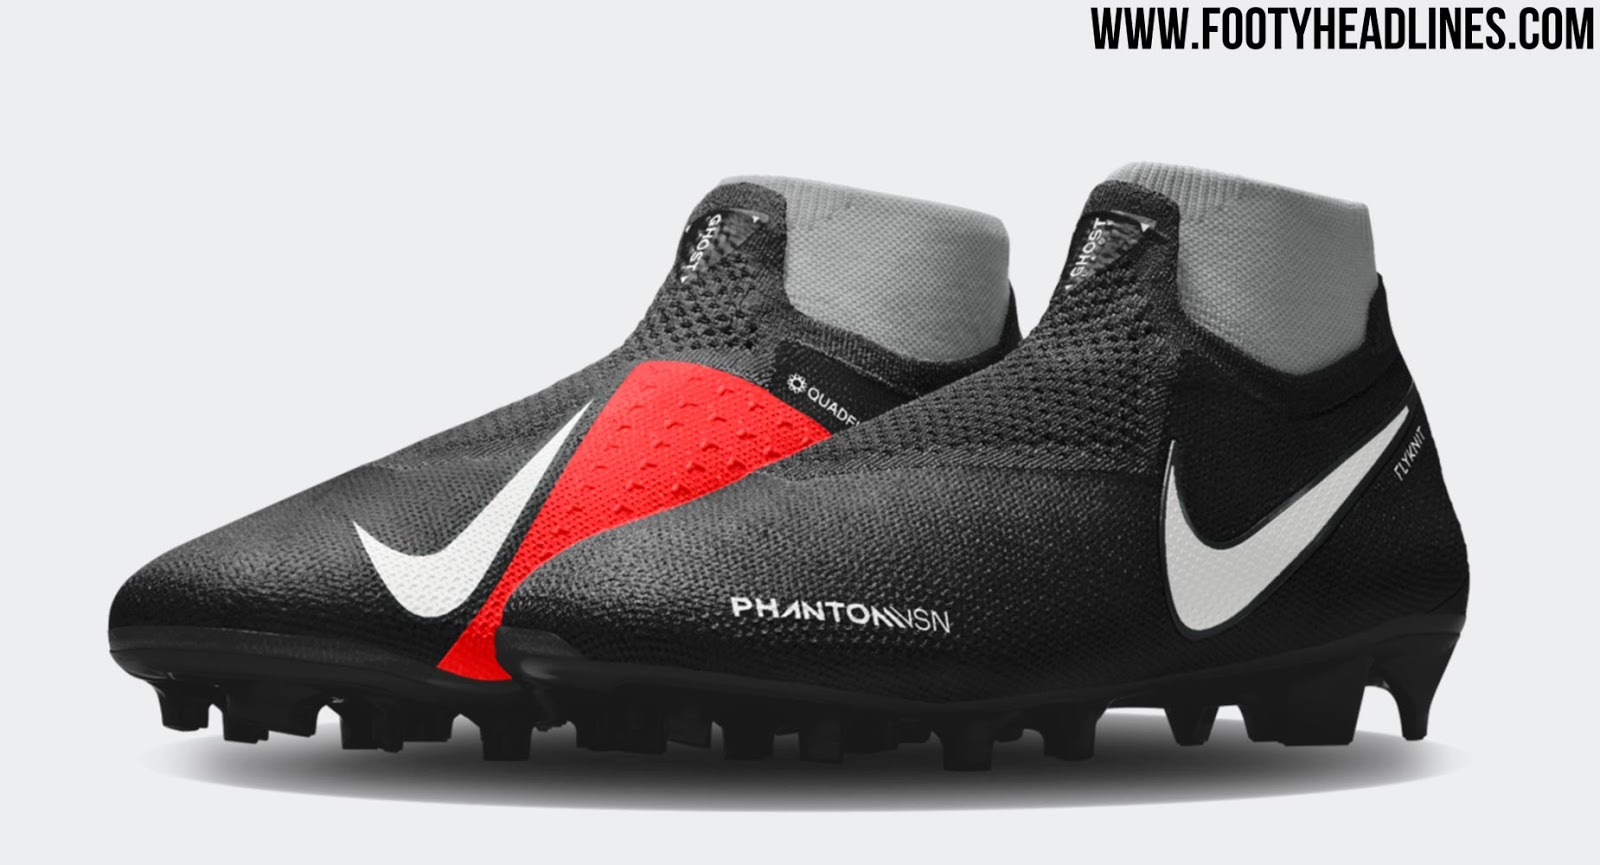 Nike Launch Phantom Vision iD Football Boots - Footy Headlines